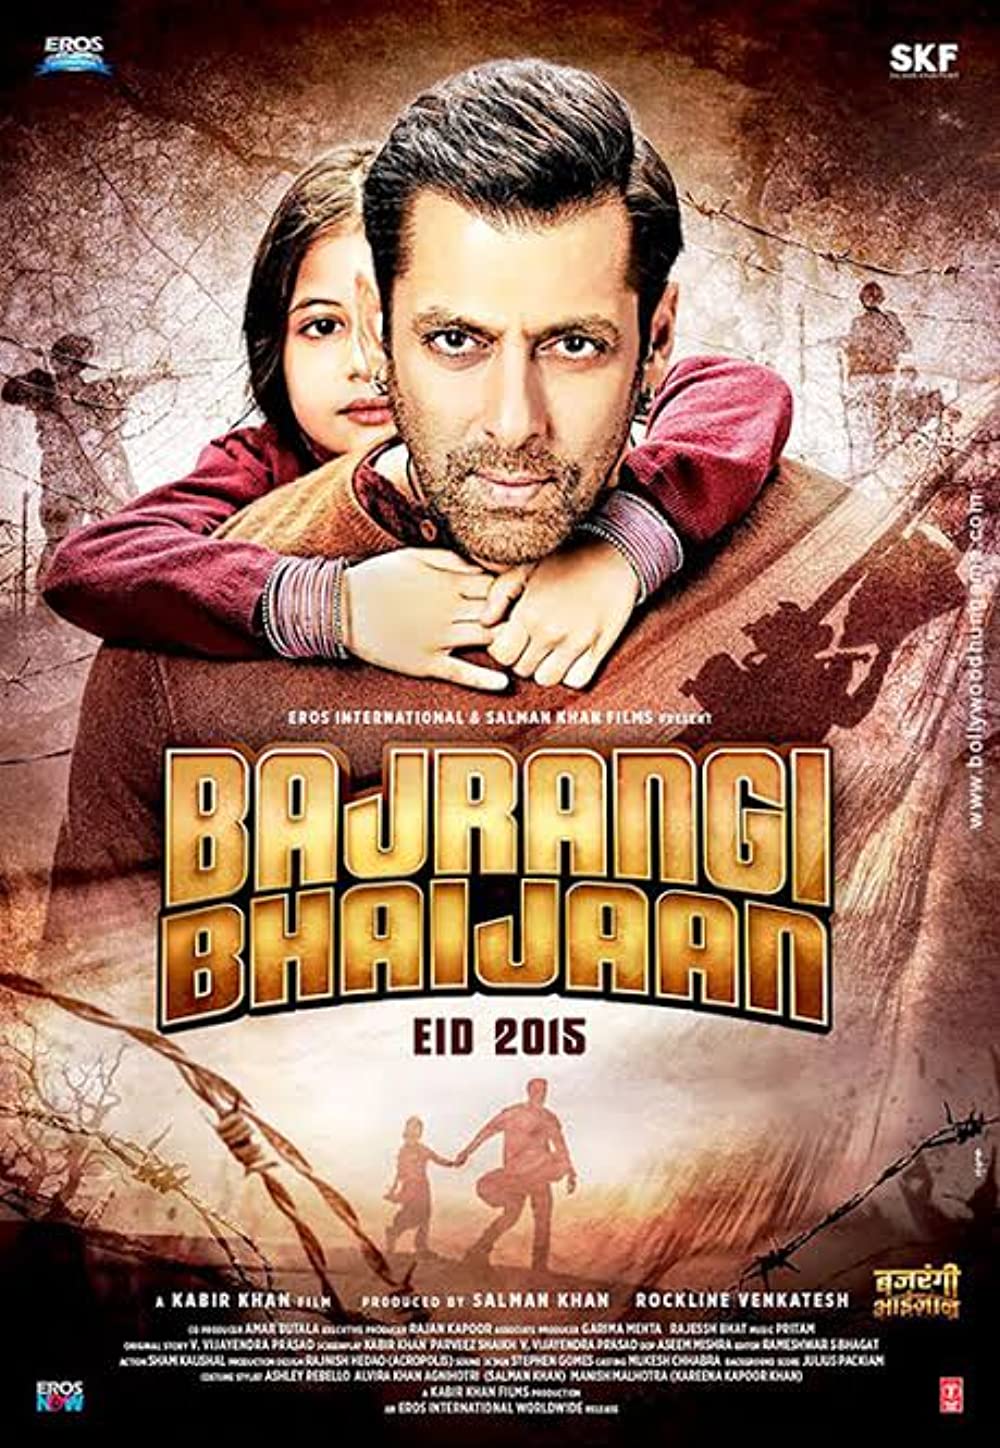 Bajrangi Bhaijaan (2015) - Highest Budget Bollywood Movies of All Time